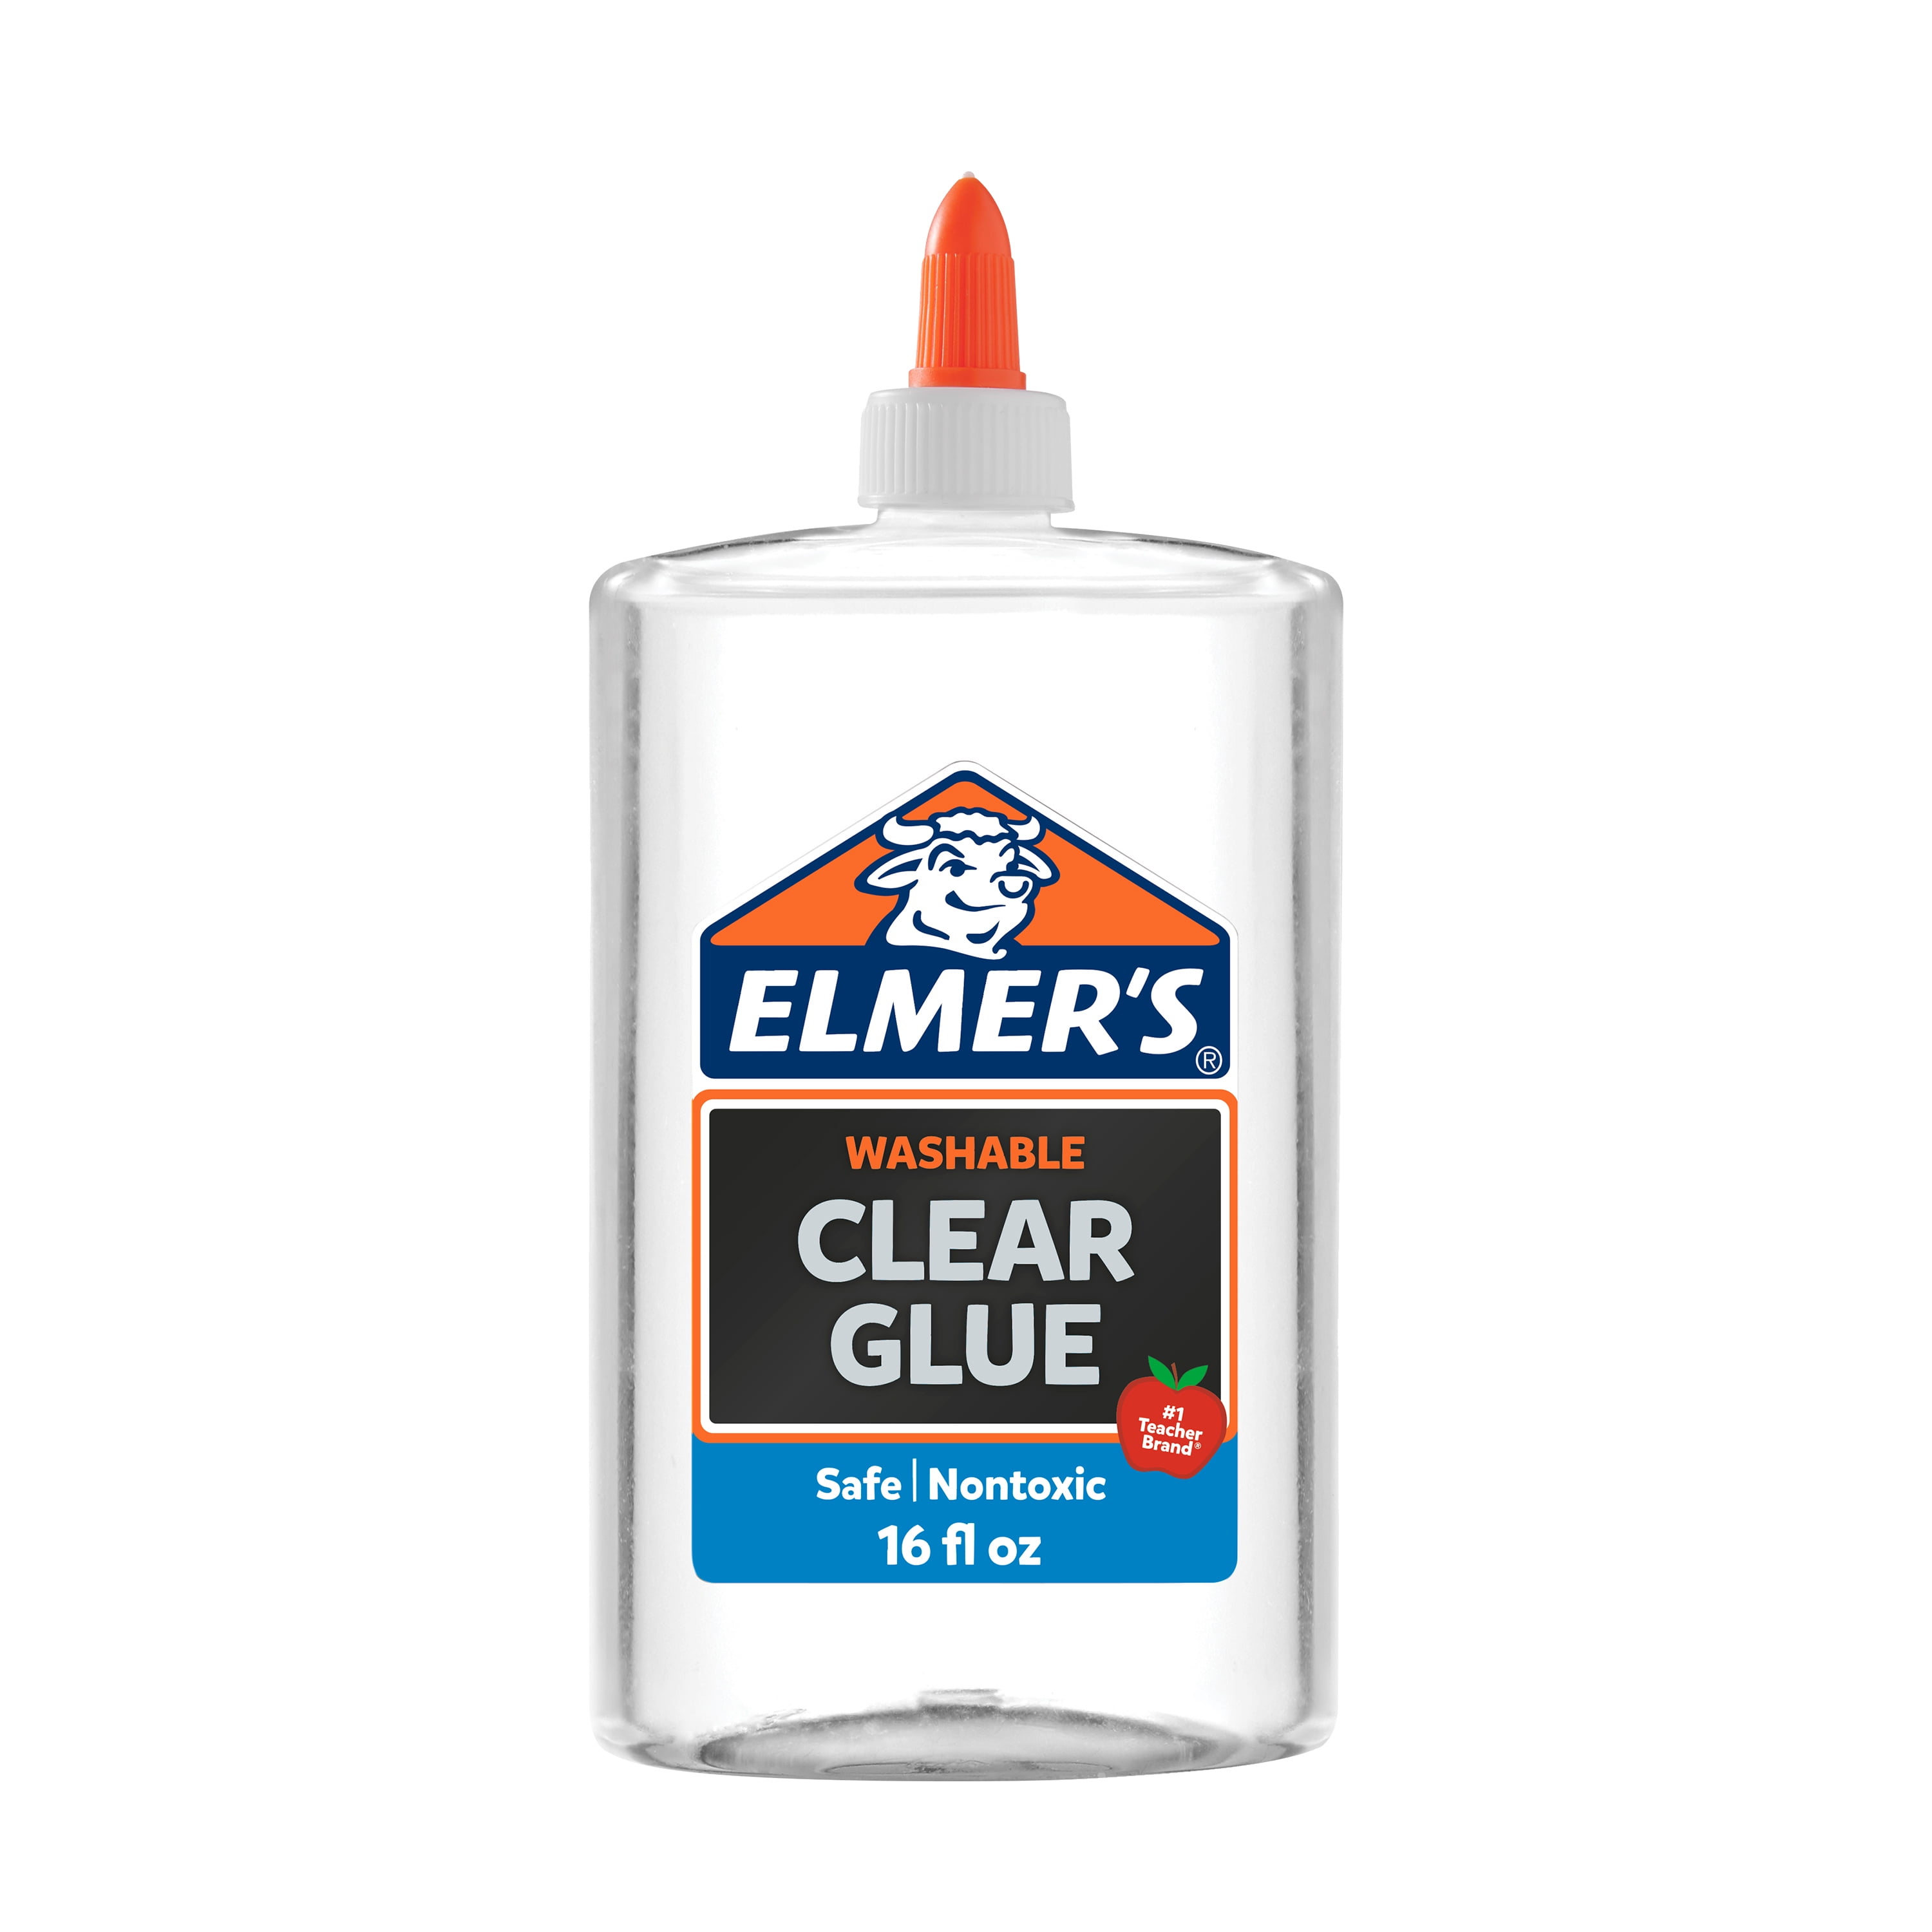 Elmer's 4 Oz. Clear Drying School Glue - Mechanicsburg, PA